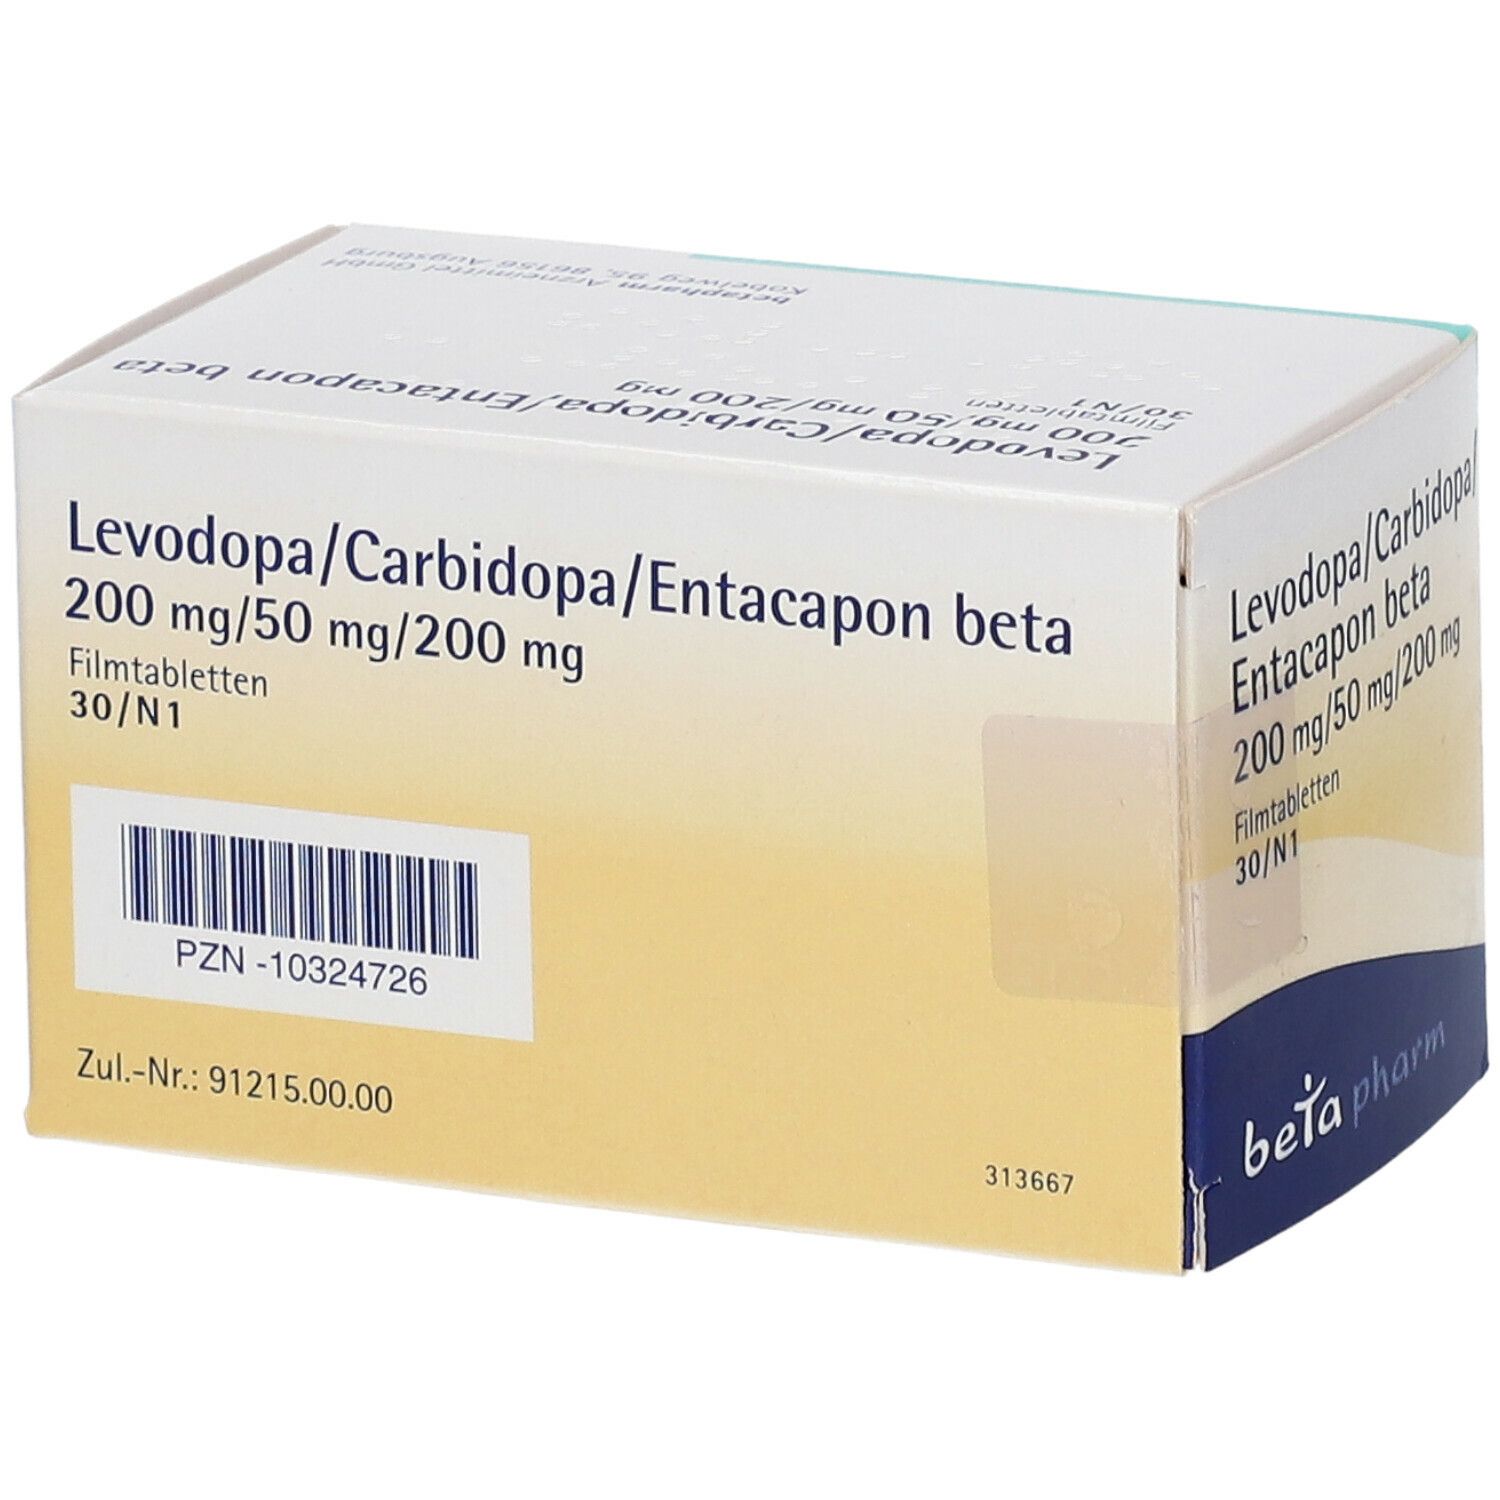 Levodopa/Carbidopa/Entacapon beta 200 mg/50 mg/200 mg